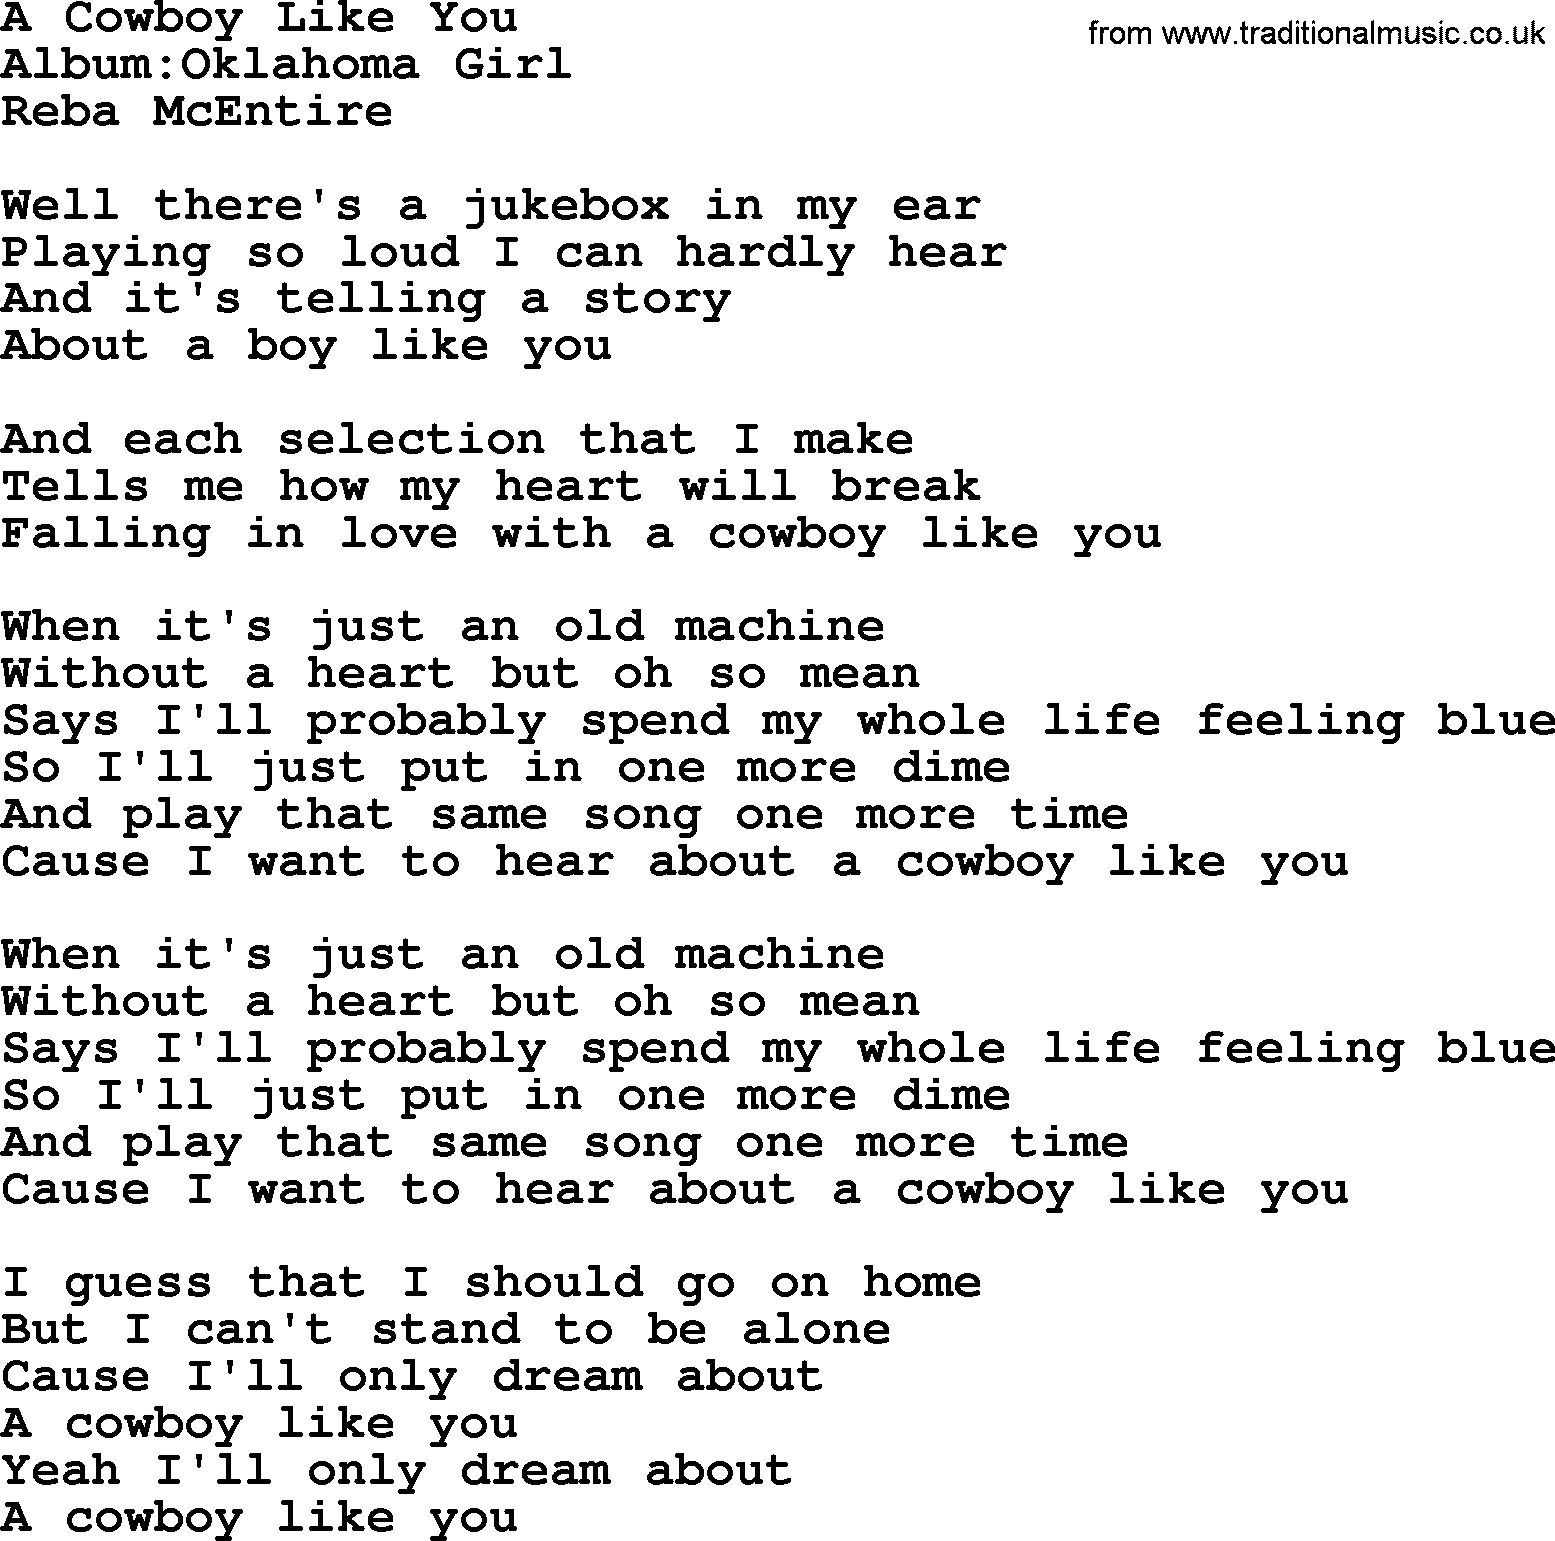 Reba McEntire song: A Cowboy Like You lyrics